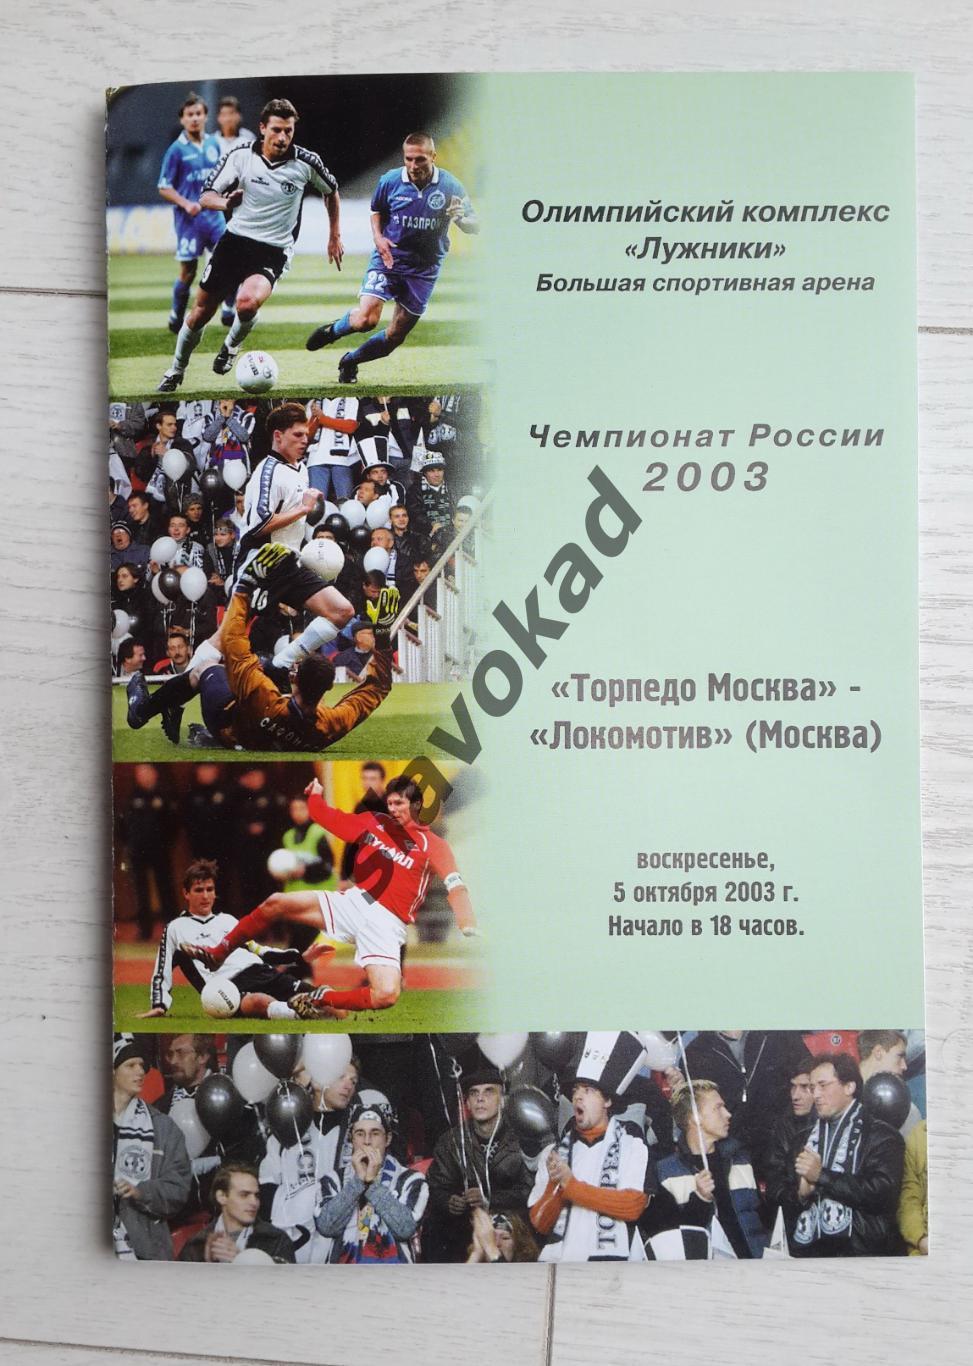 Торпедо Москва - Локомотив Москва 05.10.2003 - официальная программка